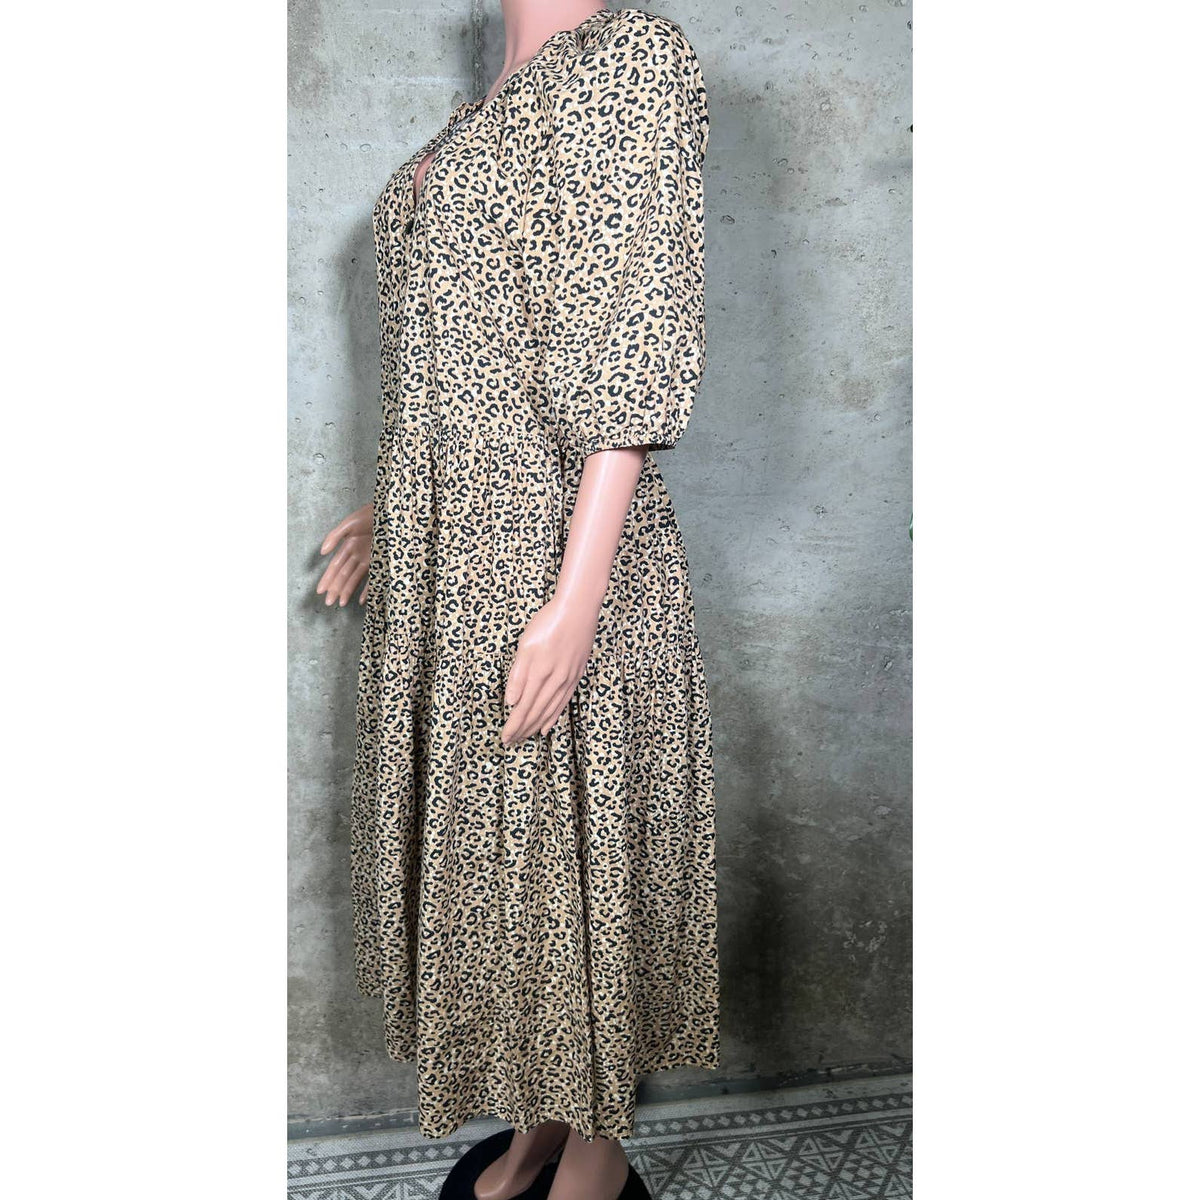 A Piece Apart Leopard Dress Sz.8